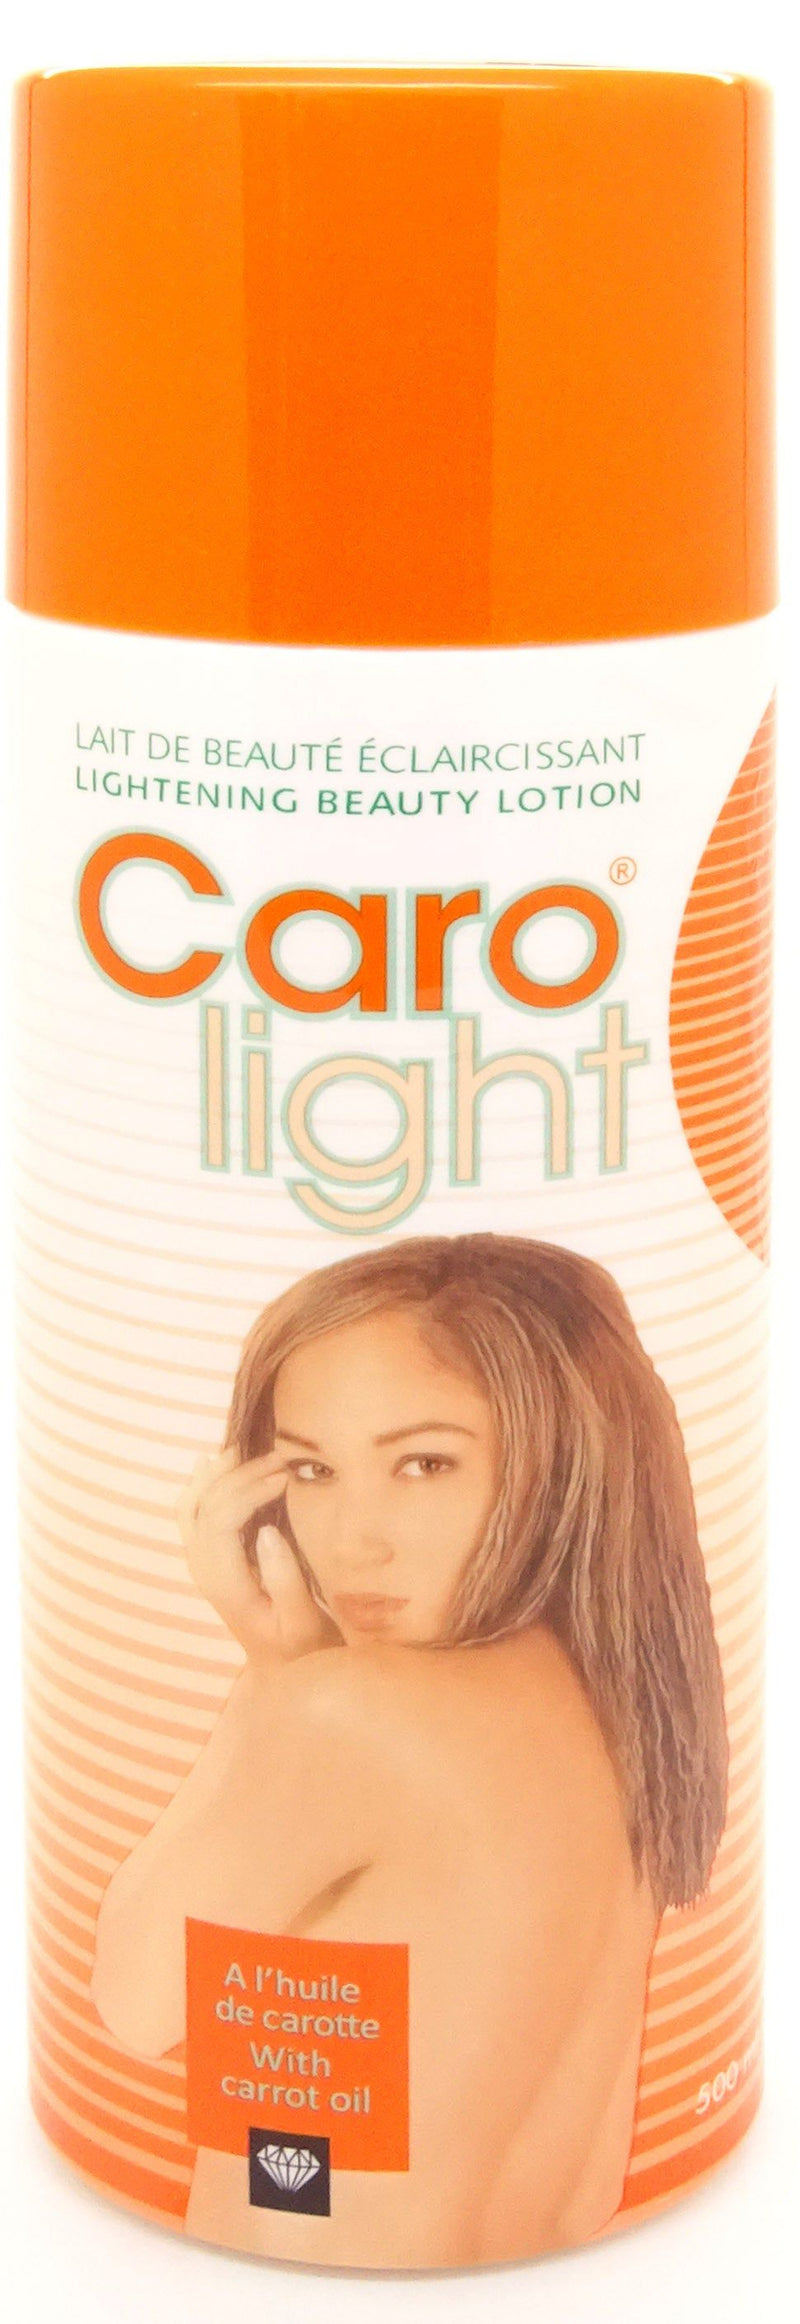 Caro Light Caro light Lightening Beauty Lotion With Carrot Oil 500ml